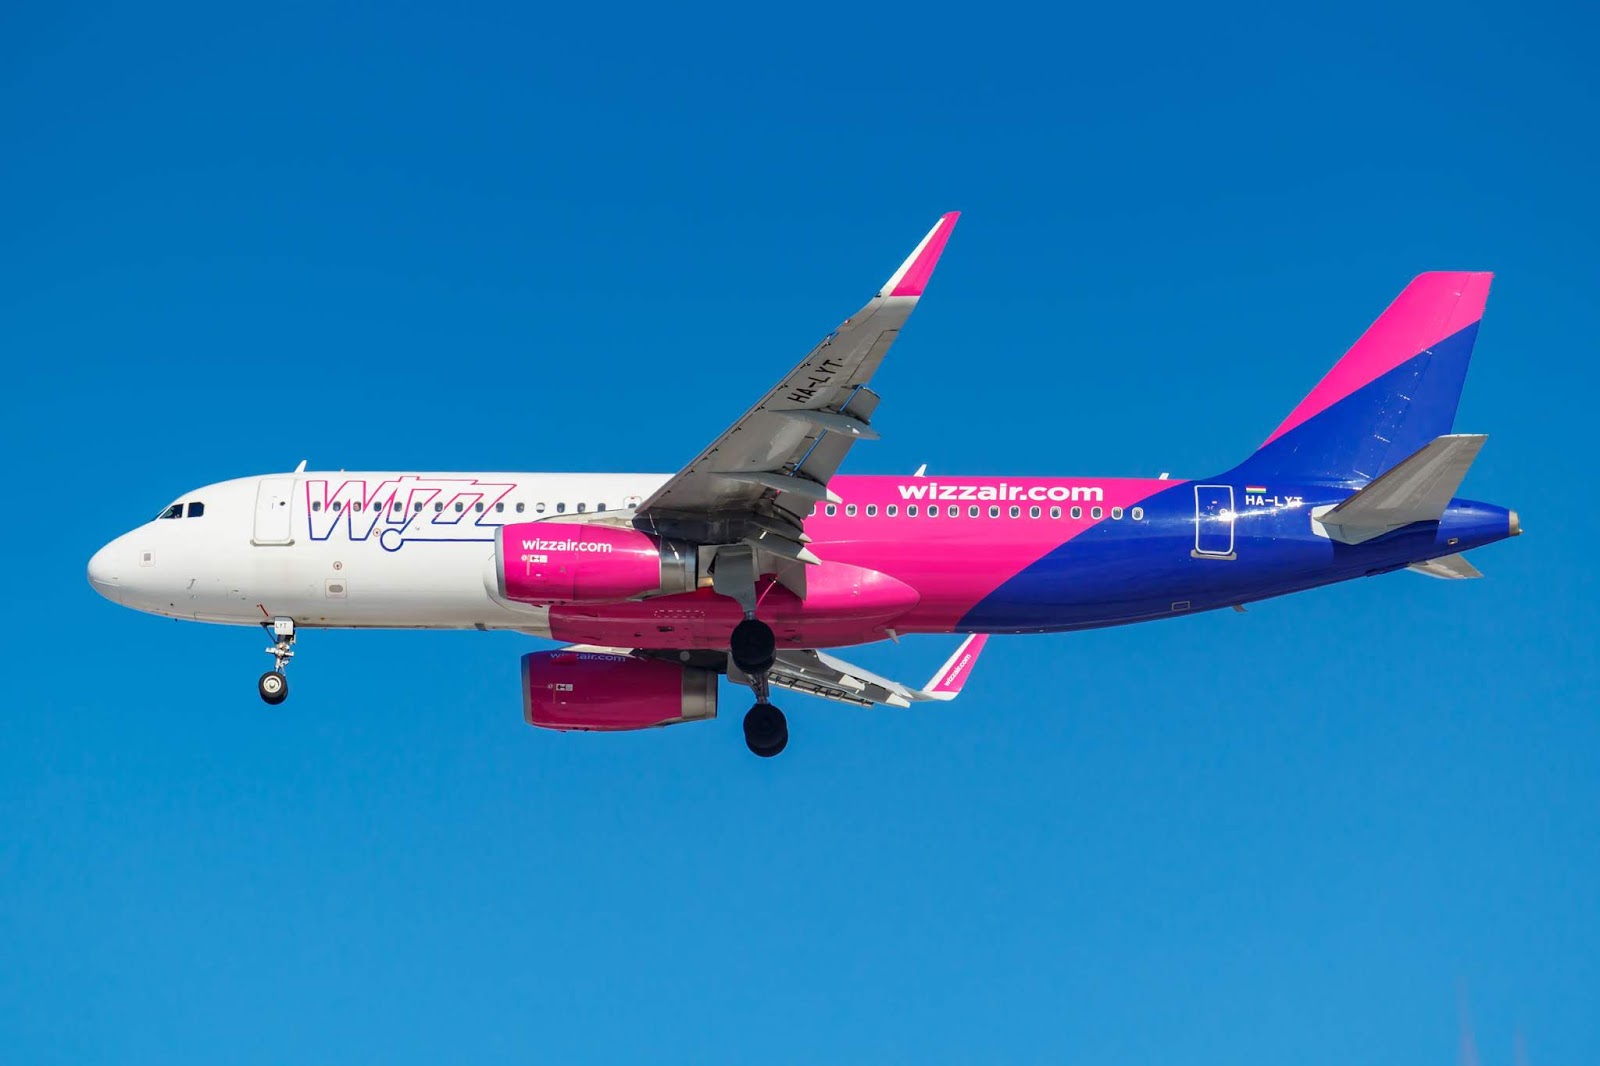 Wizz Air Earnings: Will Headwinds Weigh on Summer Bookings?